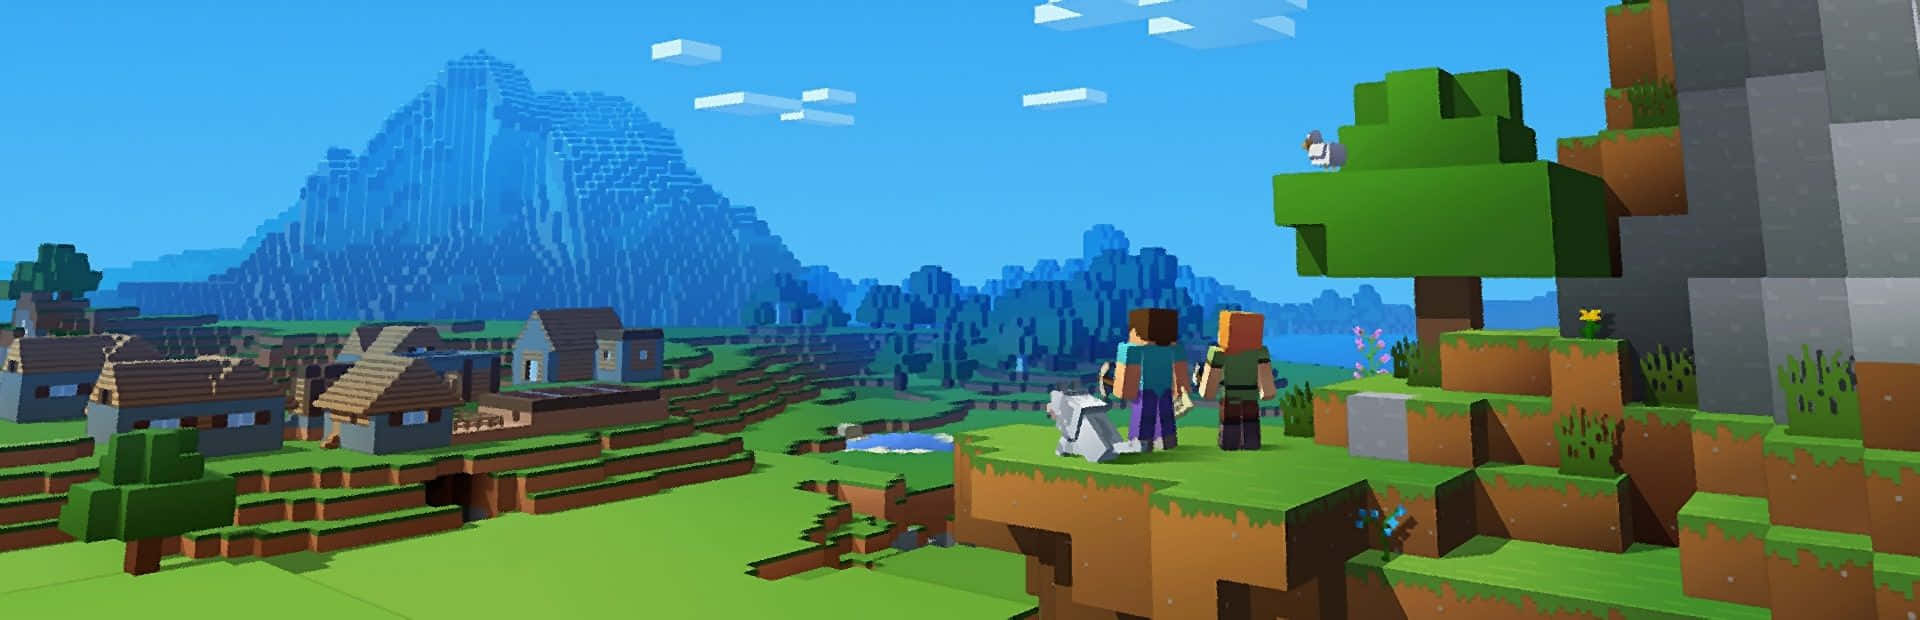 Minecraft Bedrock Edition: Adventure Awaits Wallpaper